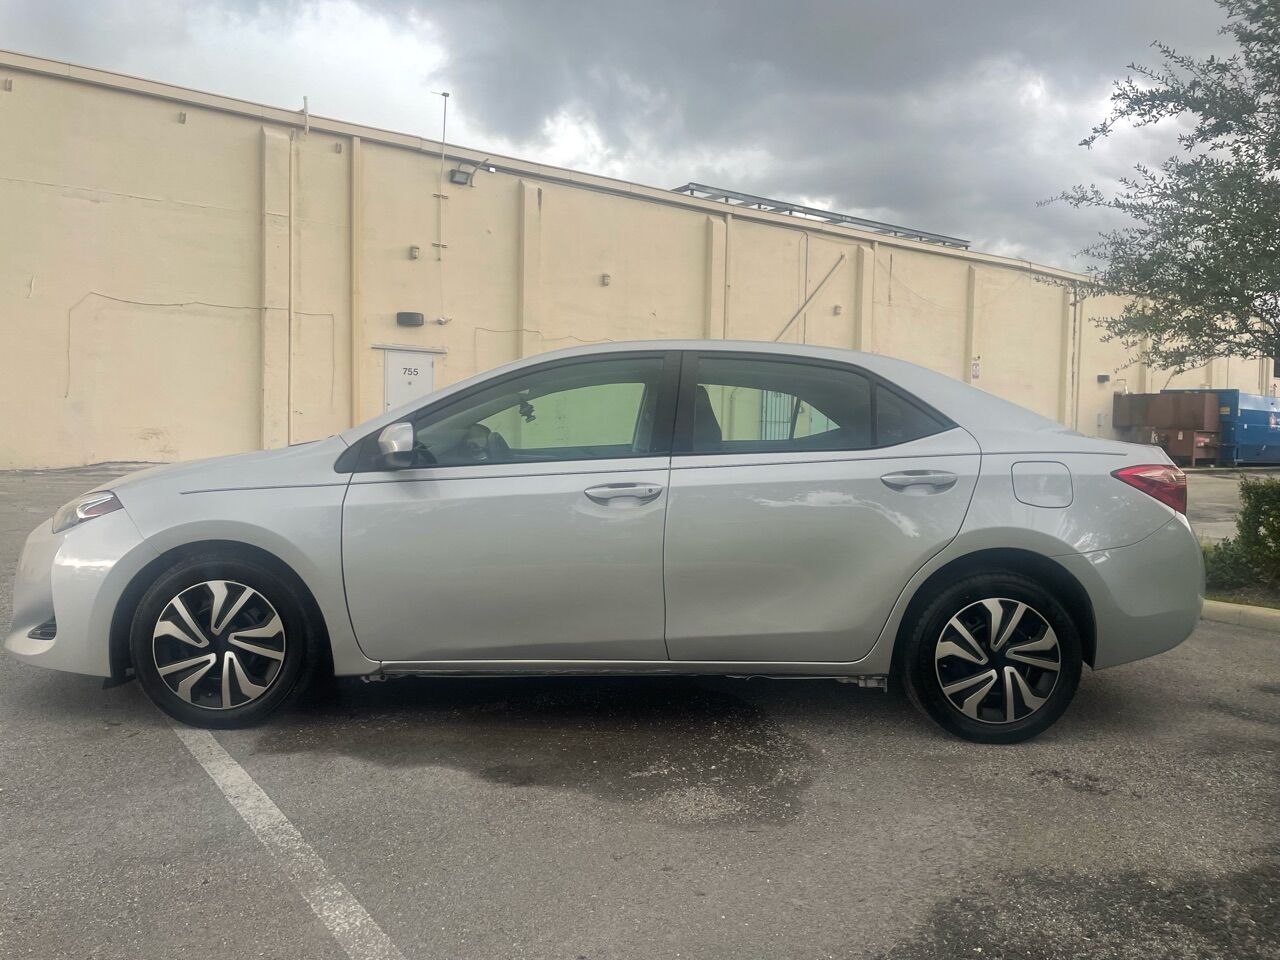 2019 TOYOTA Corolla Sedan - $12,900